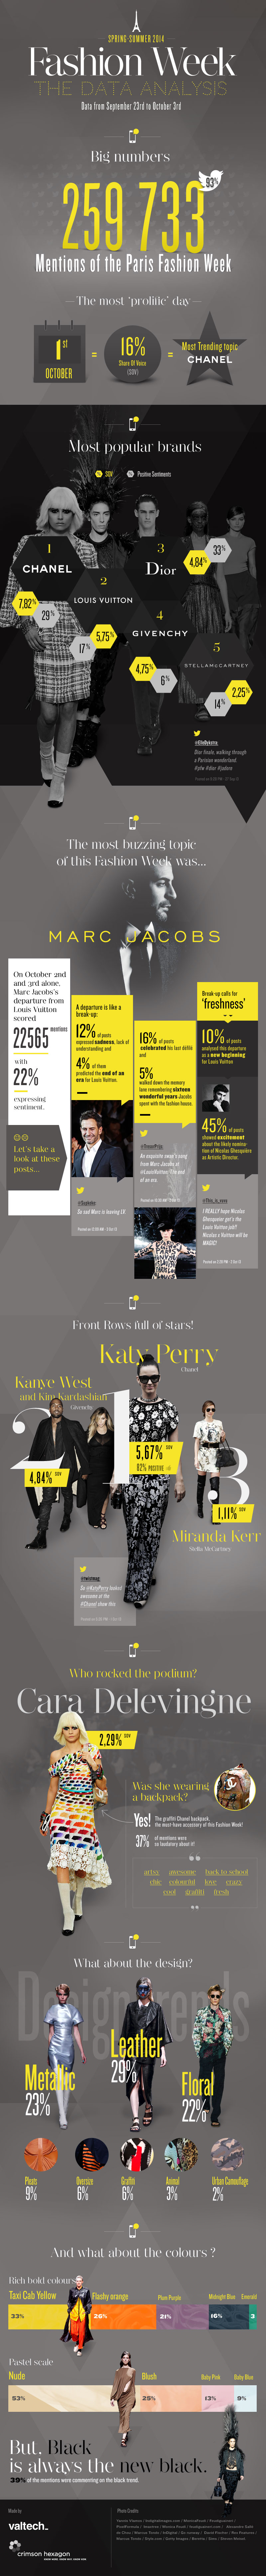 Paris Fashion Week Valech Infographic